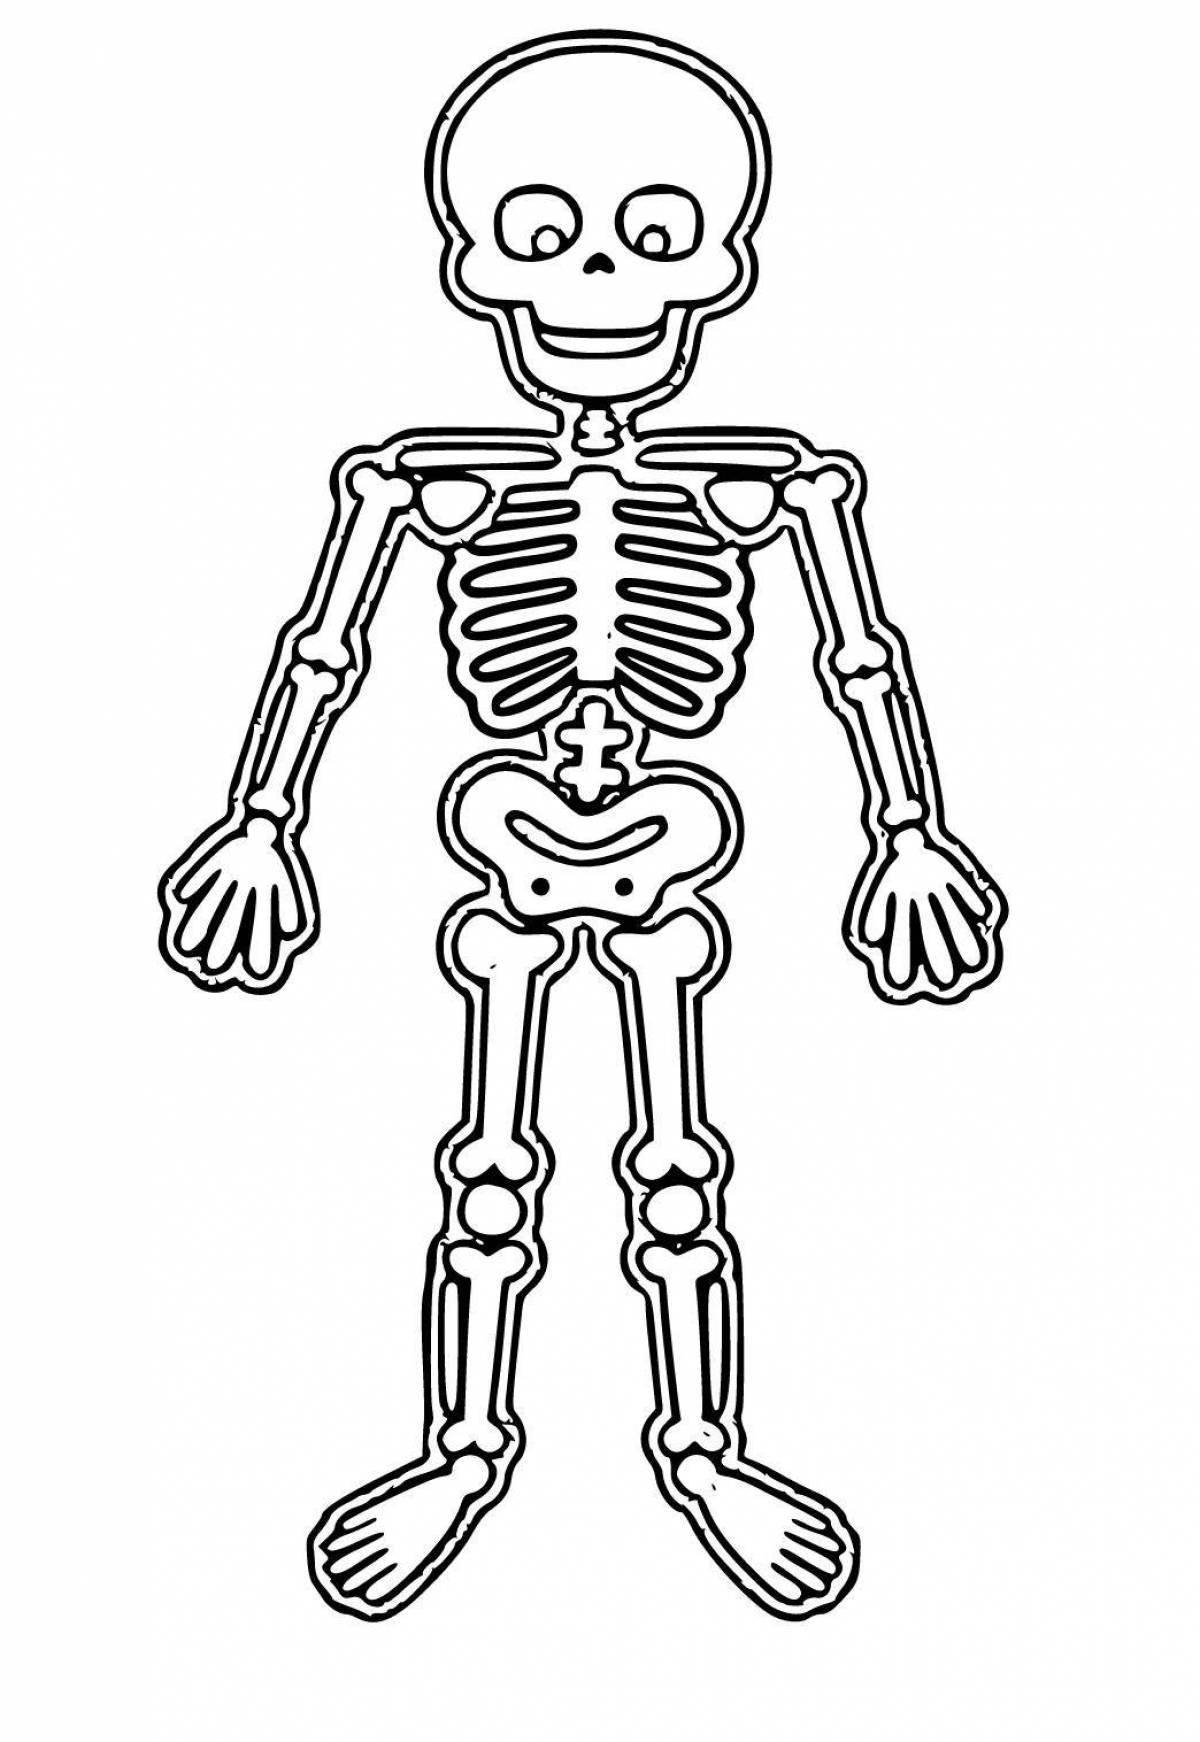 Joyful skeleton coloring for kids